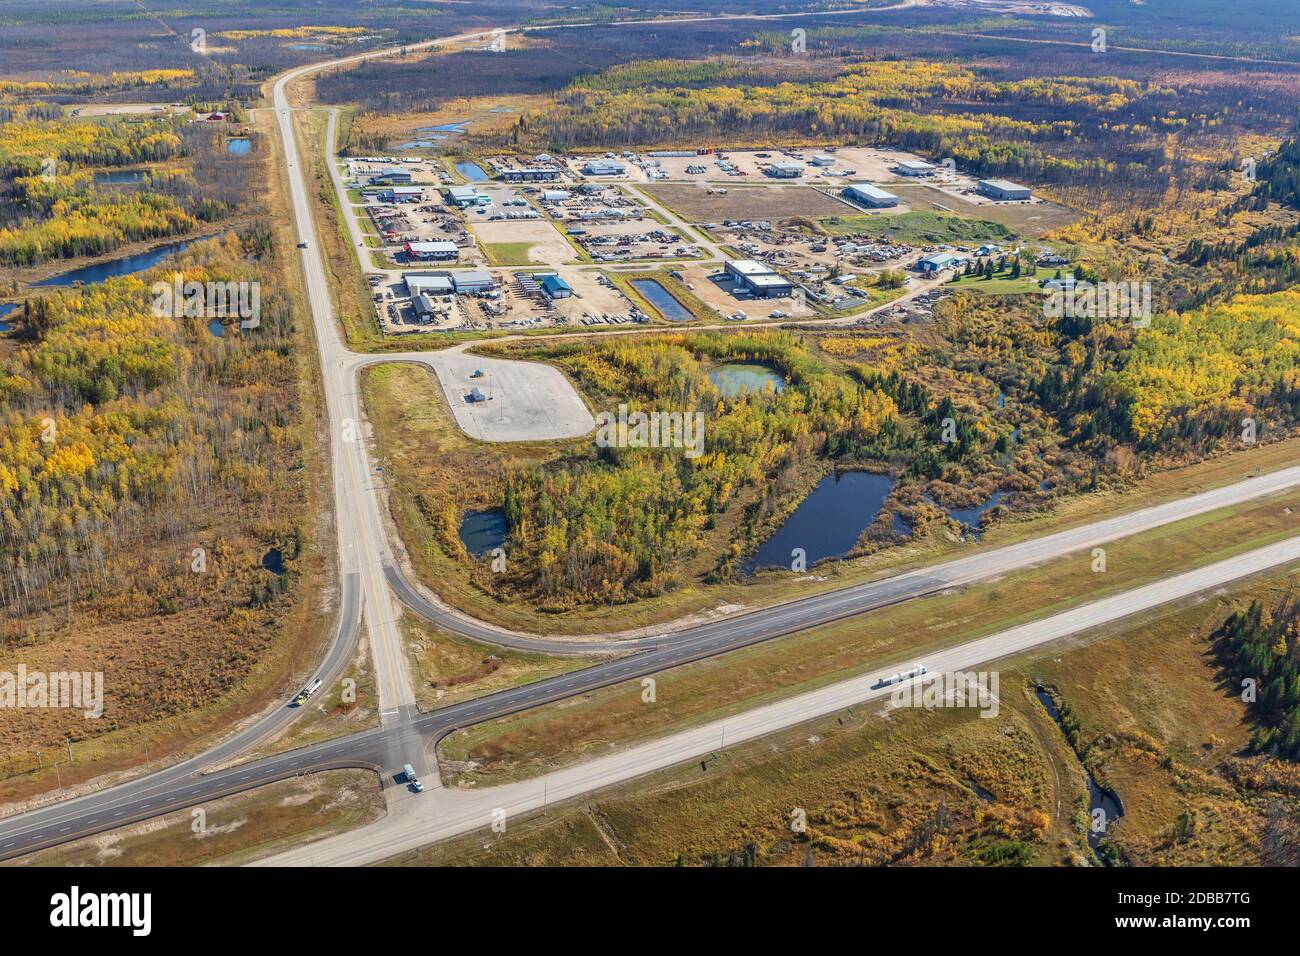 Vista aerea del Rickards Landing Industrial and Business Park a sud di Fort McMurray, Alberta Canada. Foto Stock